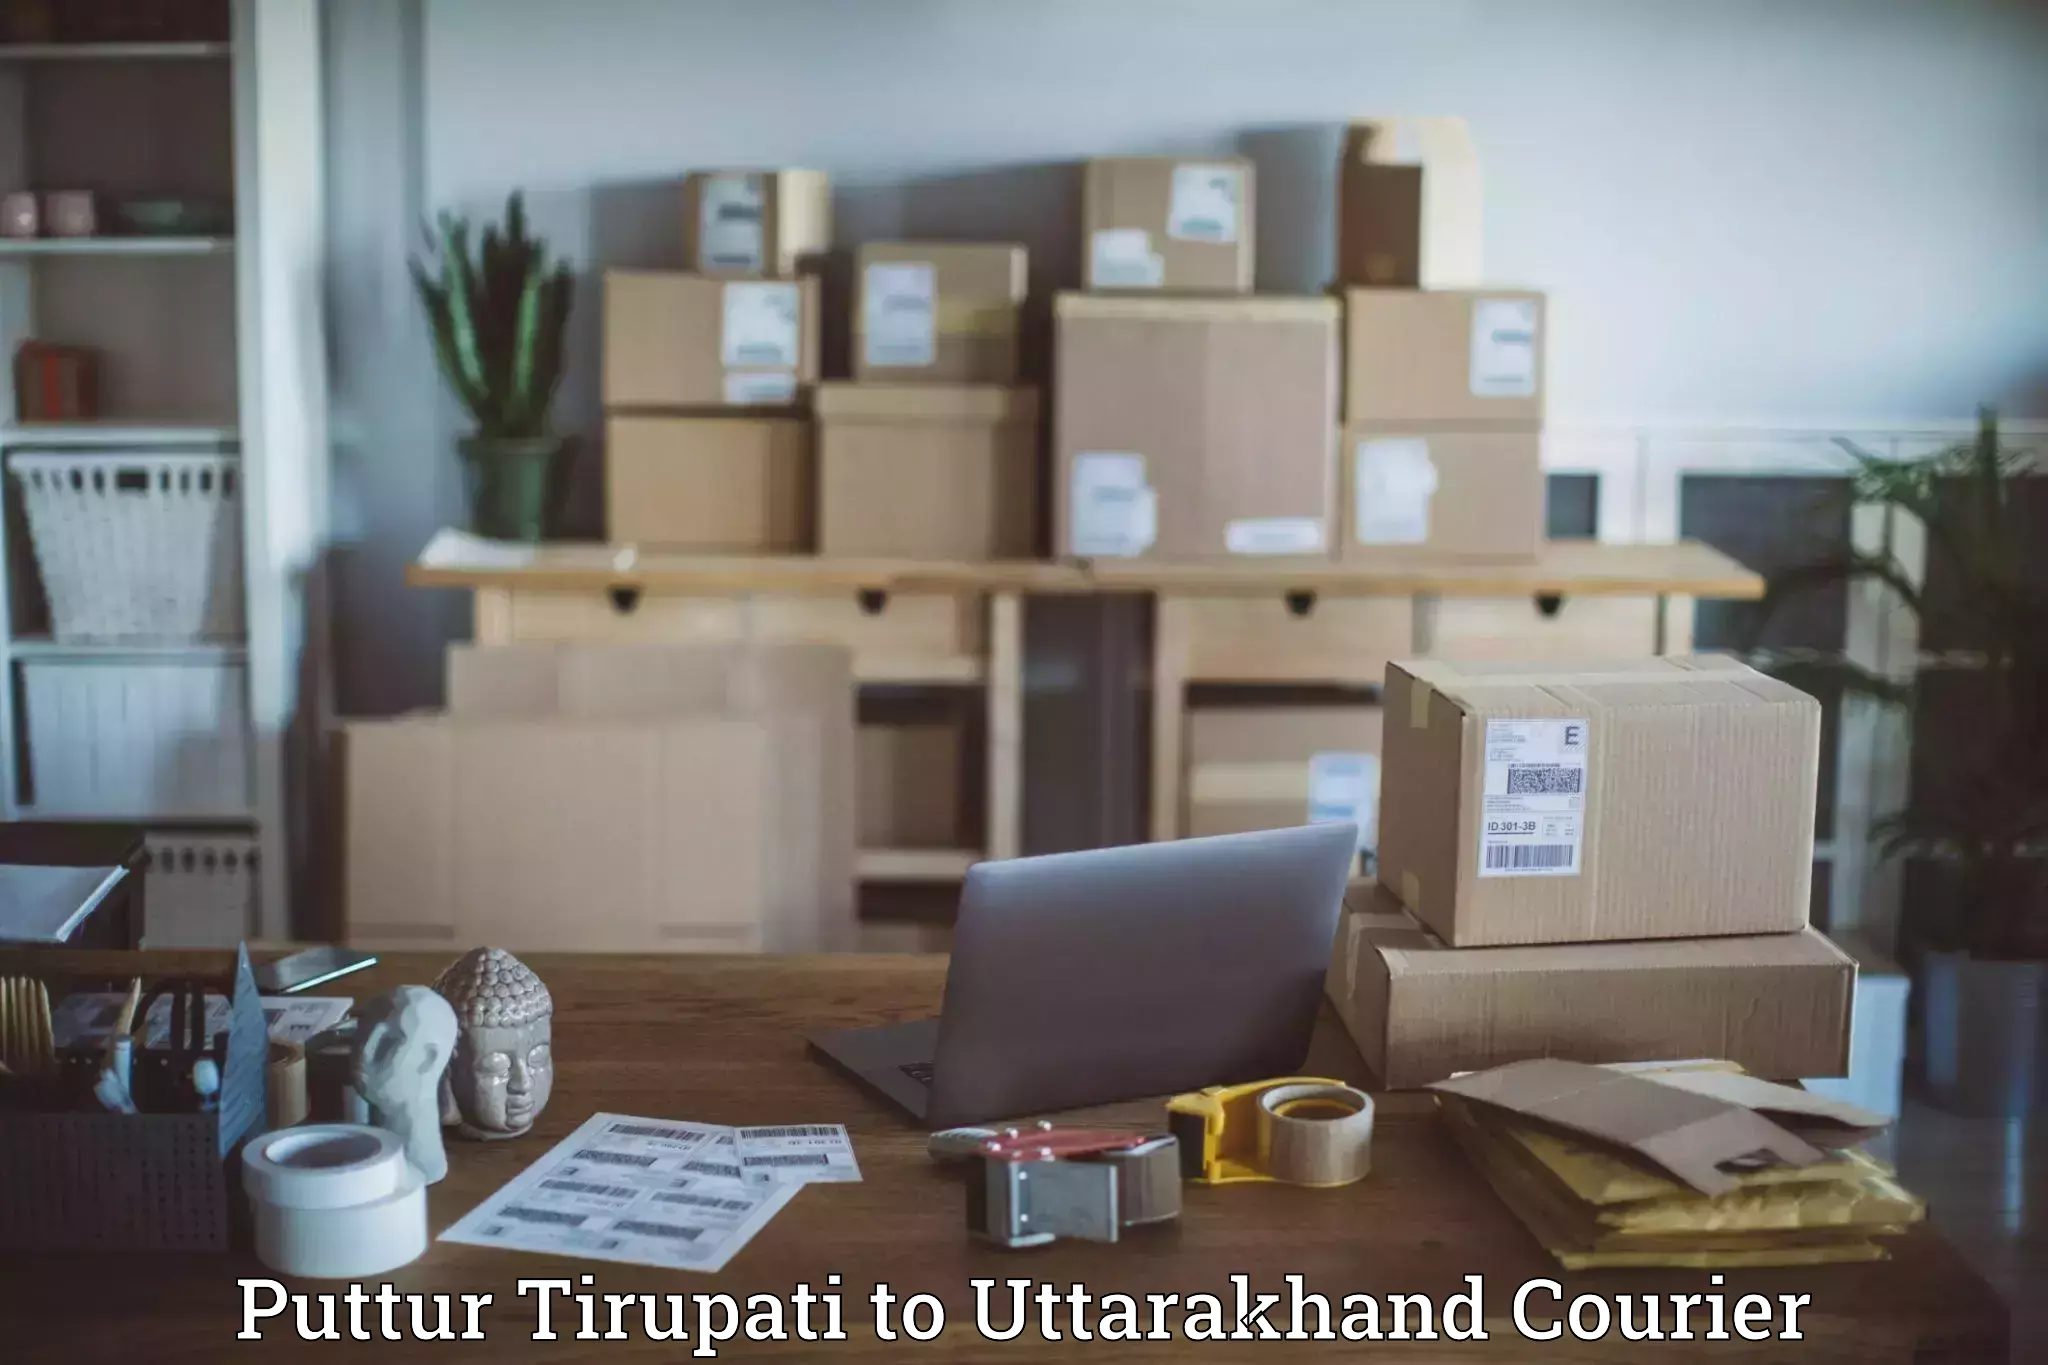 Customizable delivery plans Puttur Tirupati to IIT Roorkee